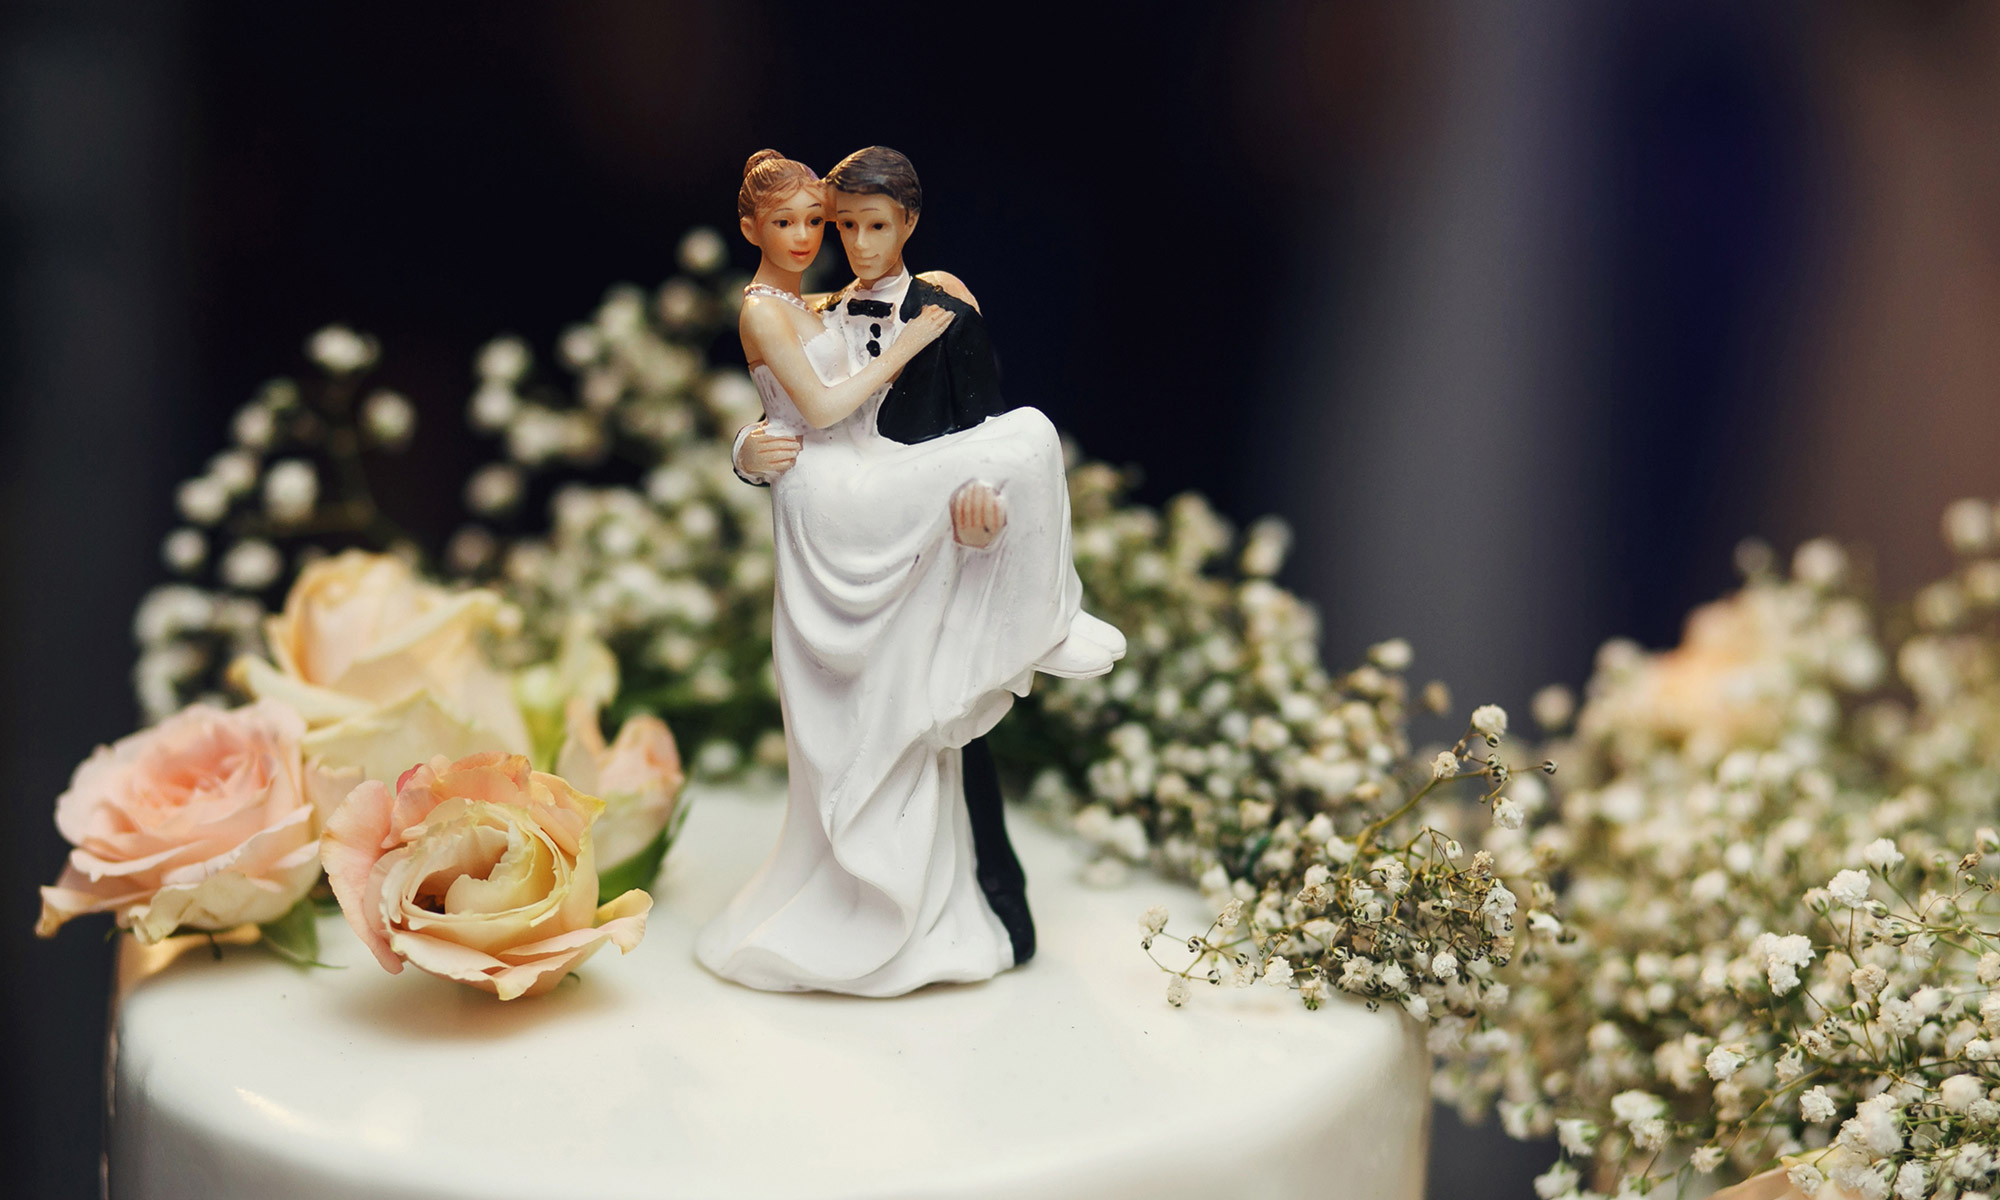 5 Gorgeous Ways to Personalize Your Wedding Cake